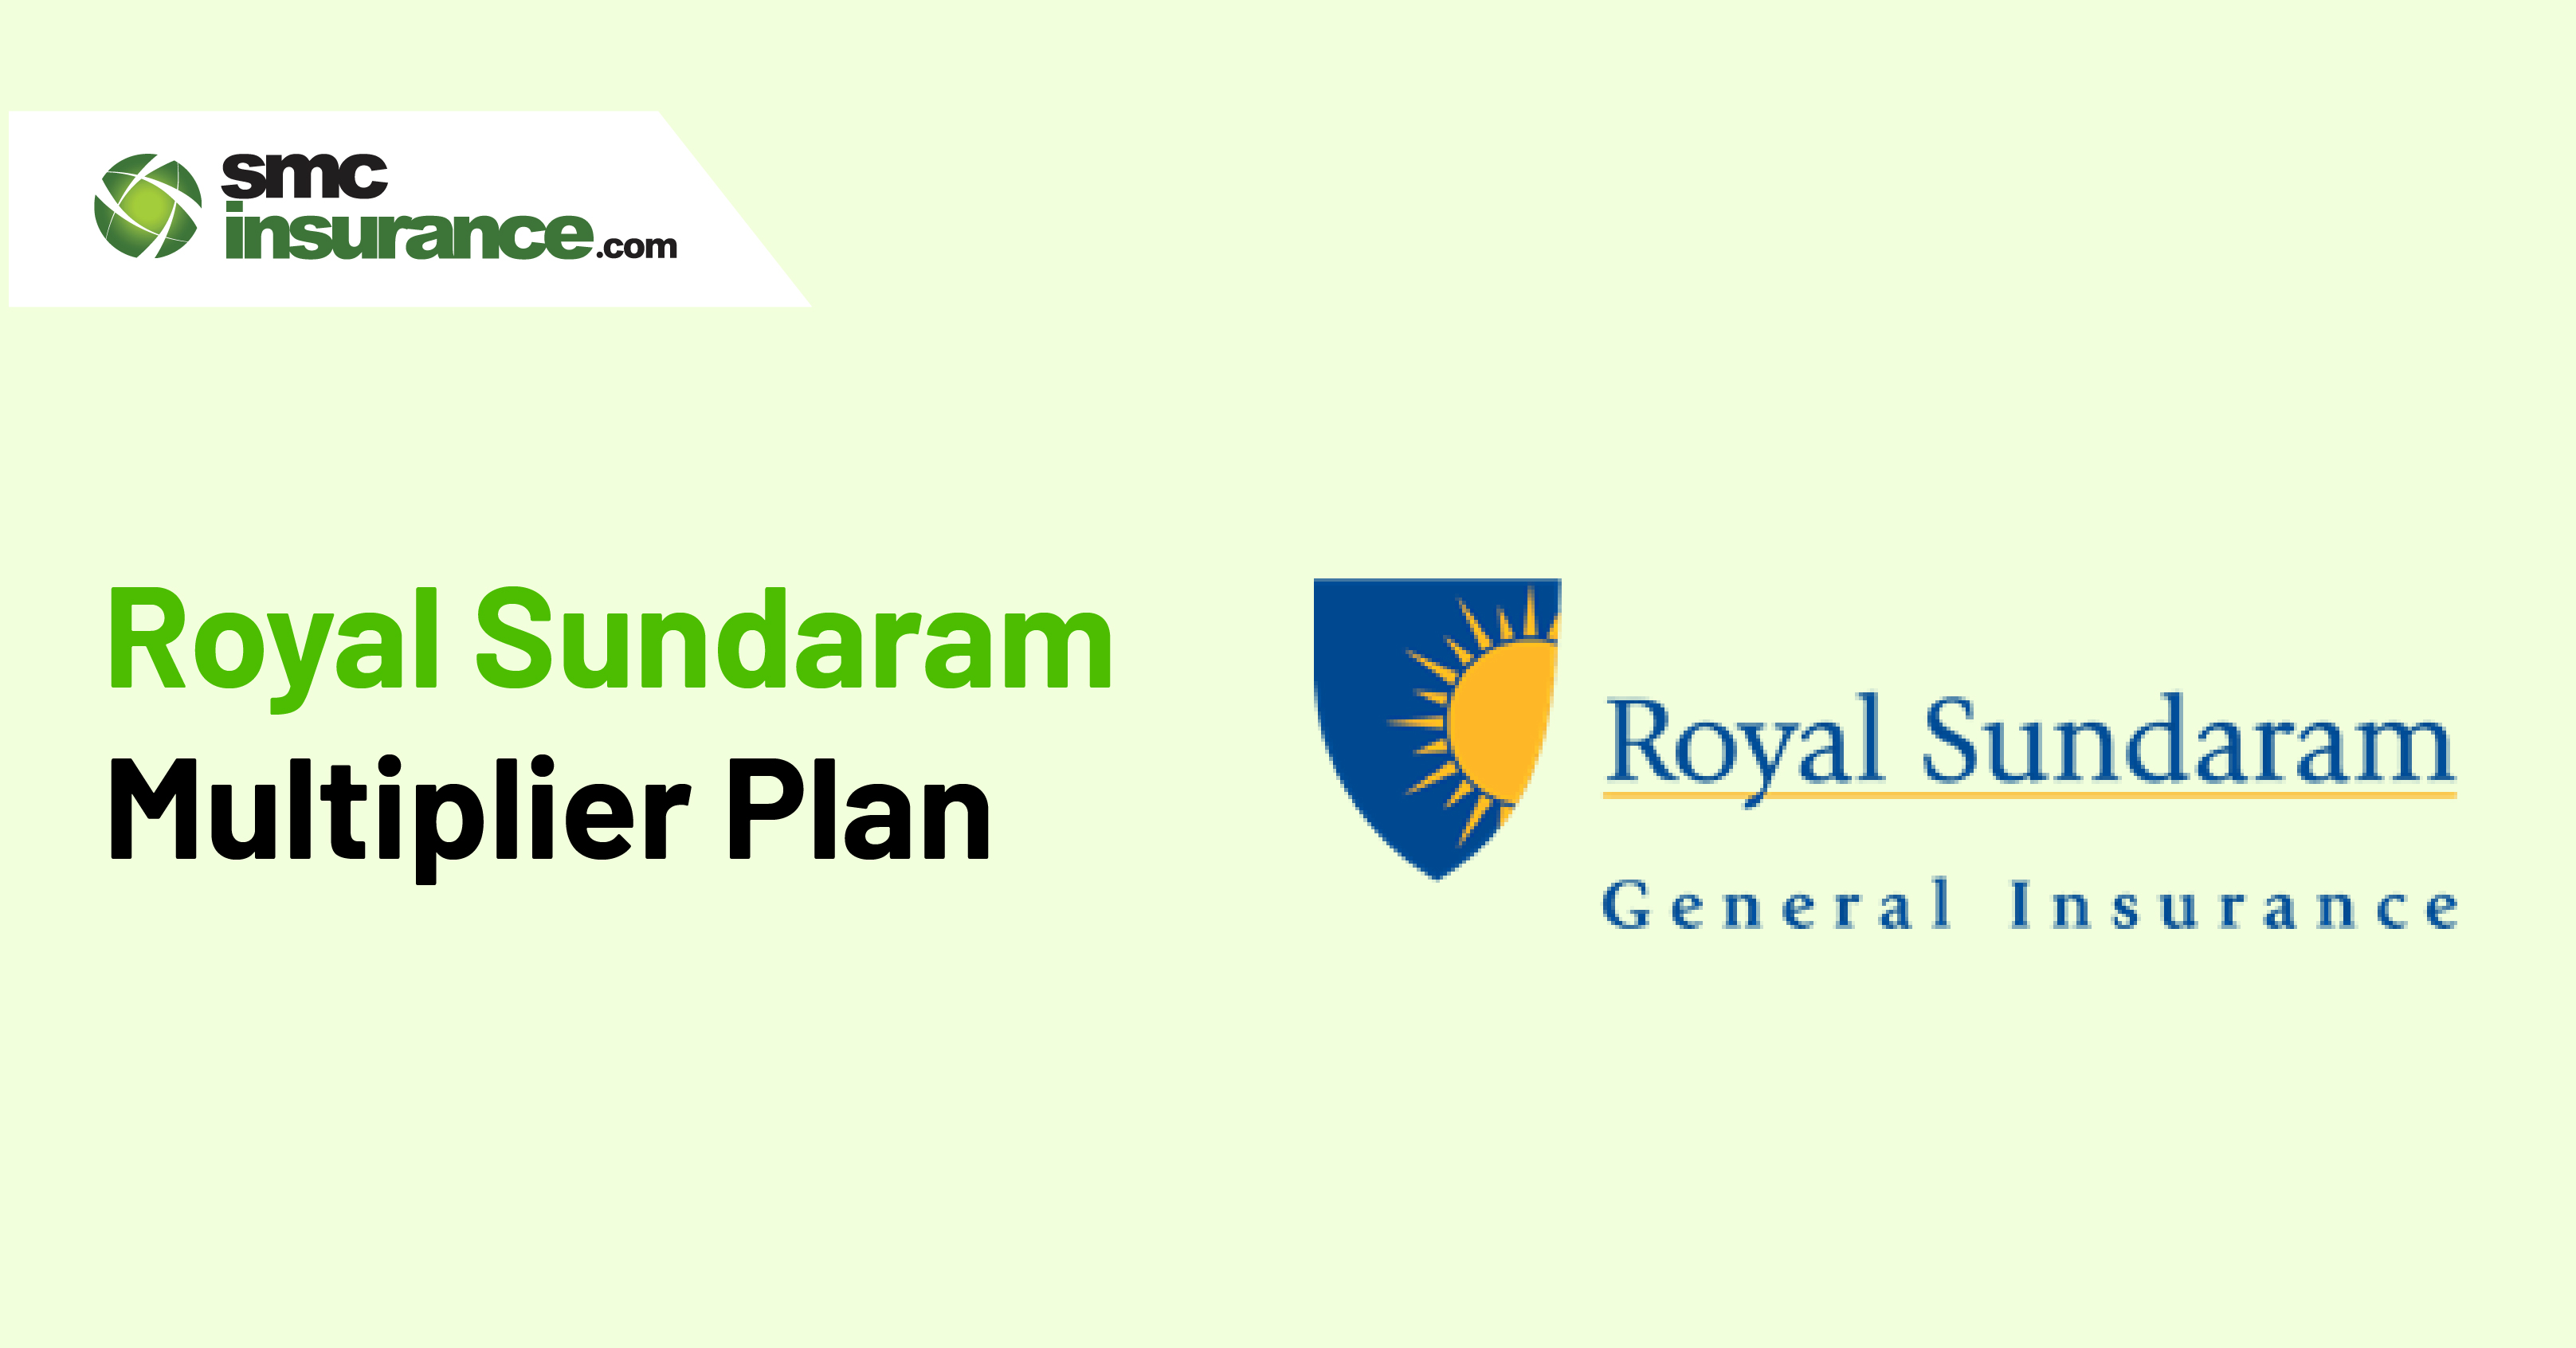 Royal Sundaram Multiplier Plan